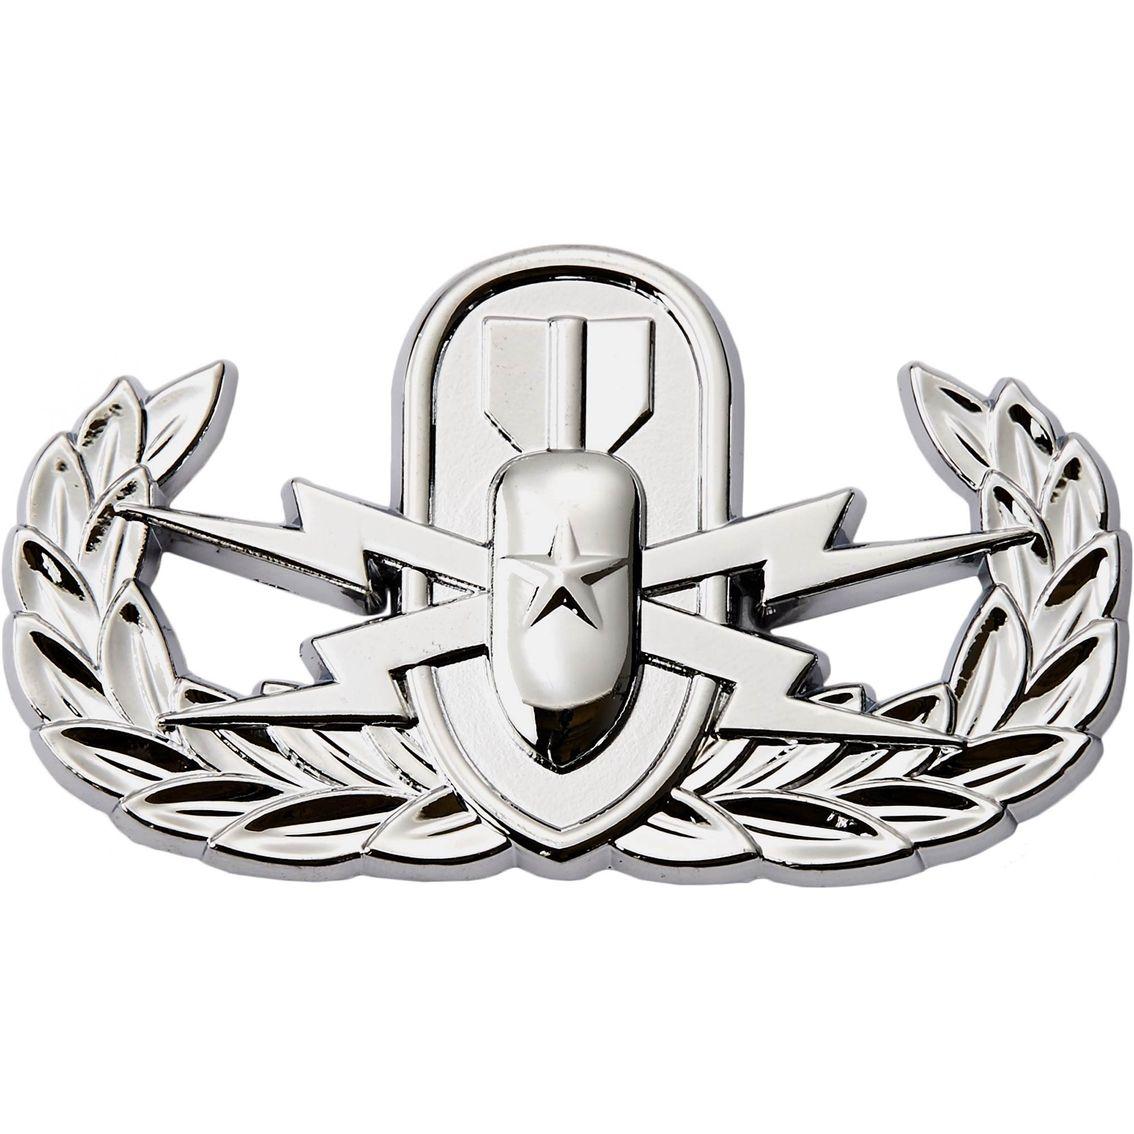 EOD Logo - Shadow Six Romeo Senior Eod Emblem. Military Logo Gear. Military